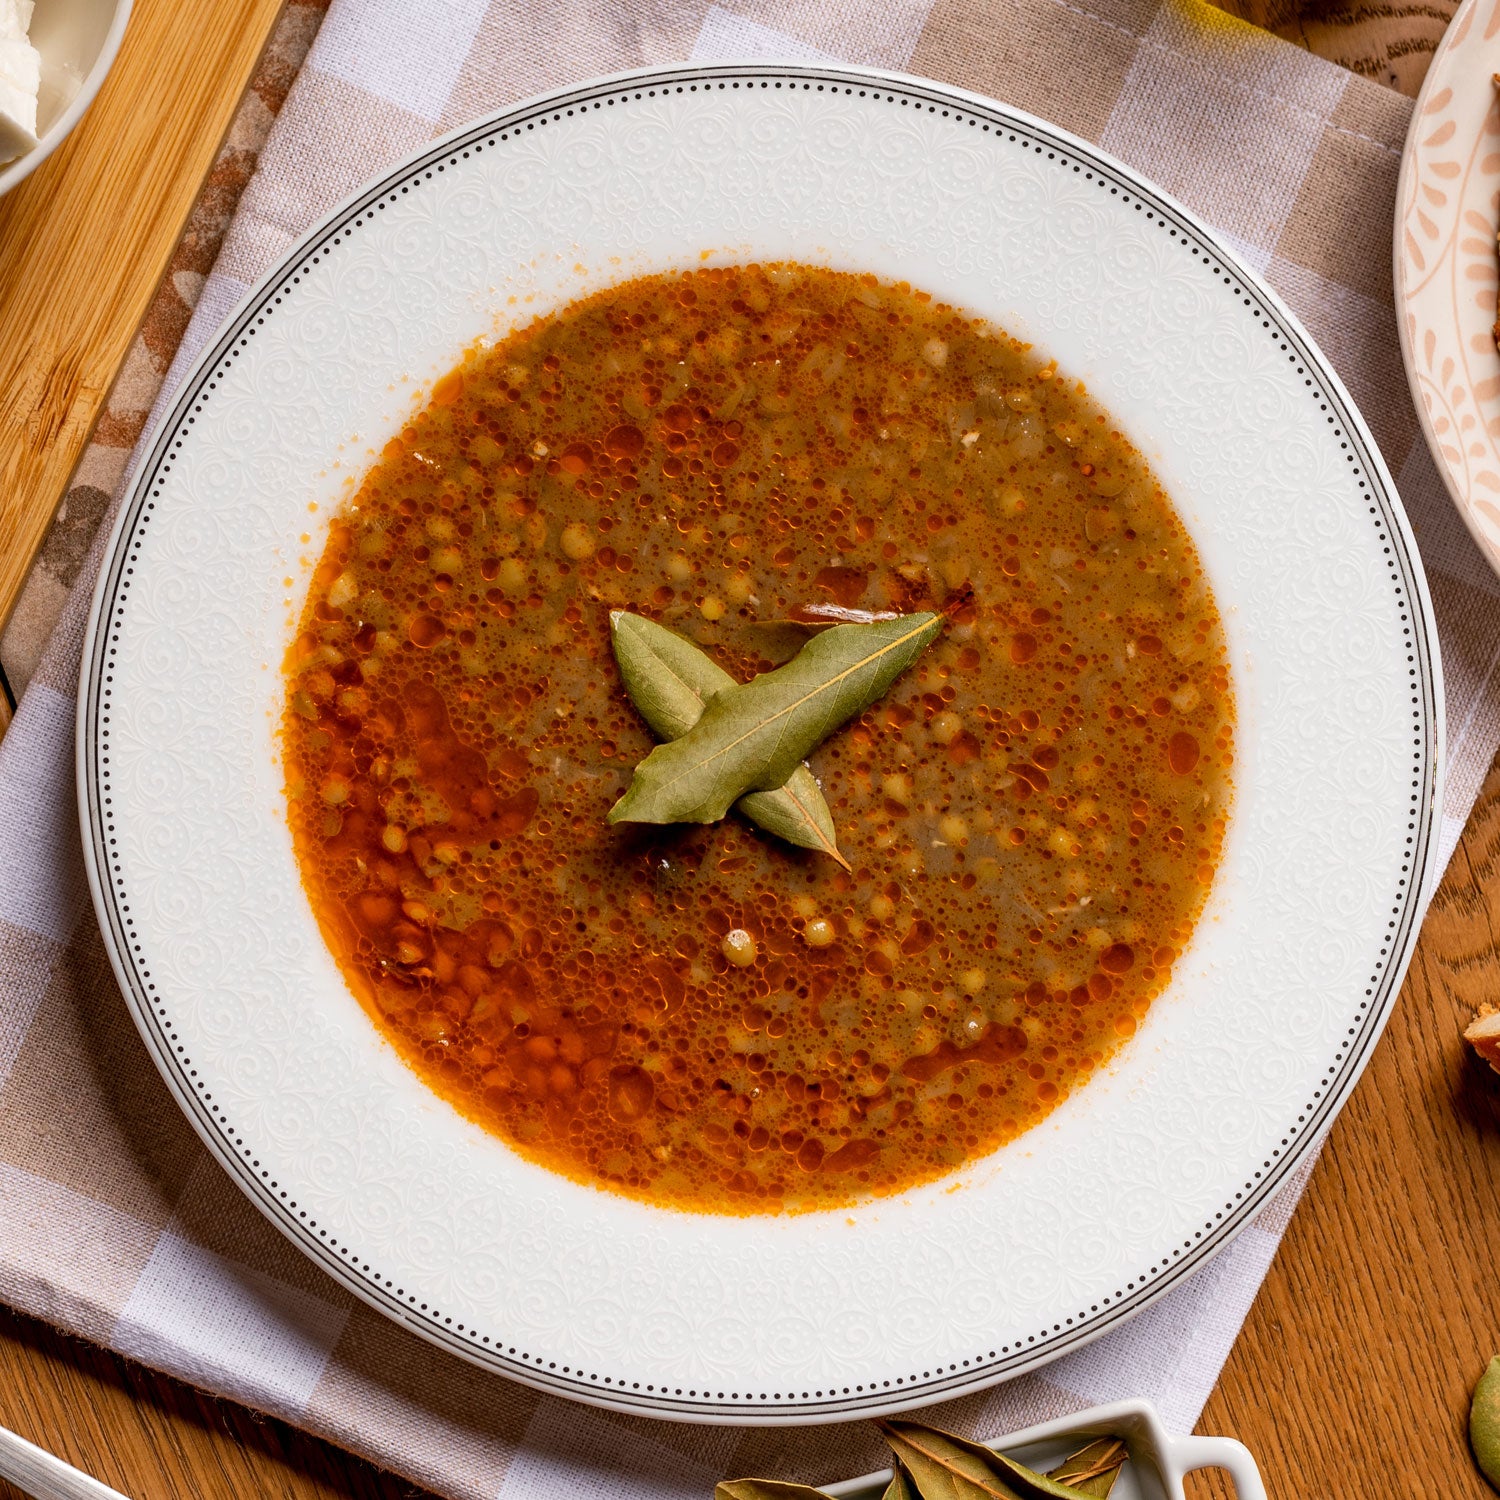 Greek-Grocery-Greek-Products-bio-lentils-beans-500g